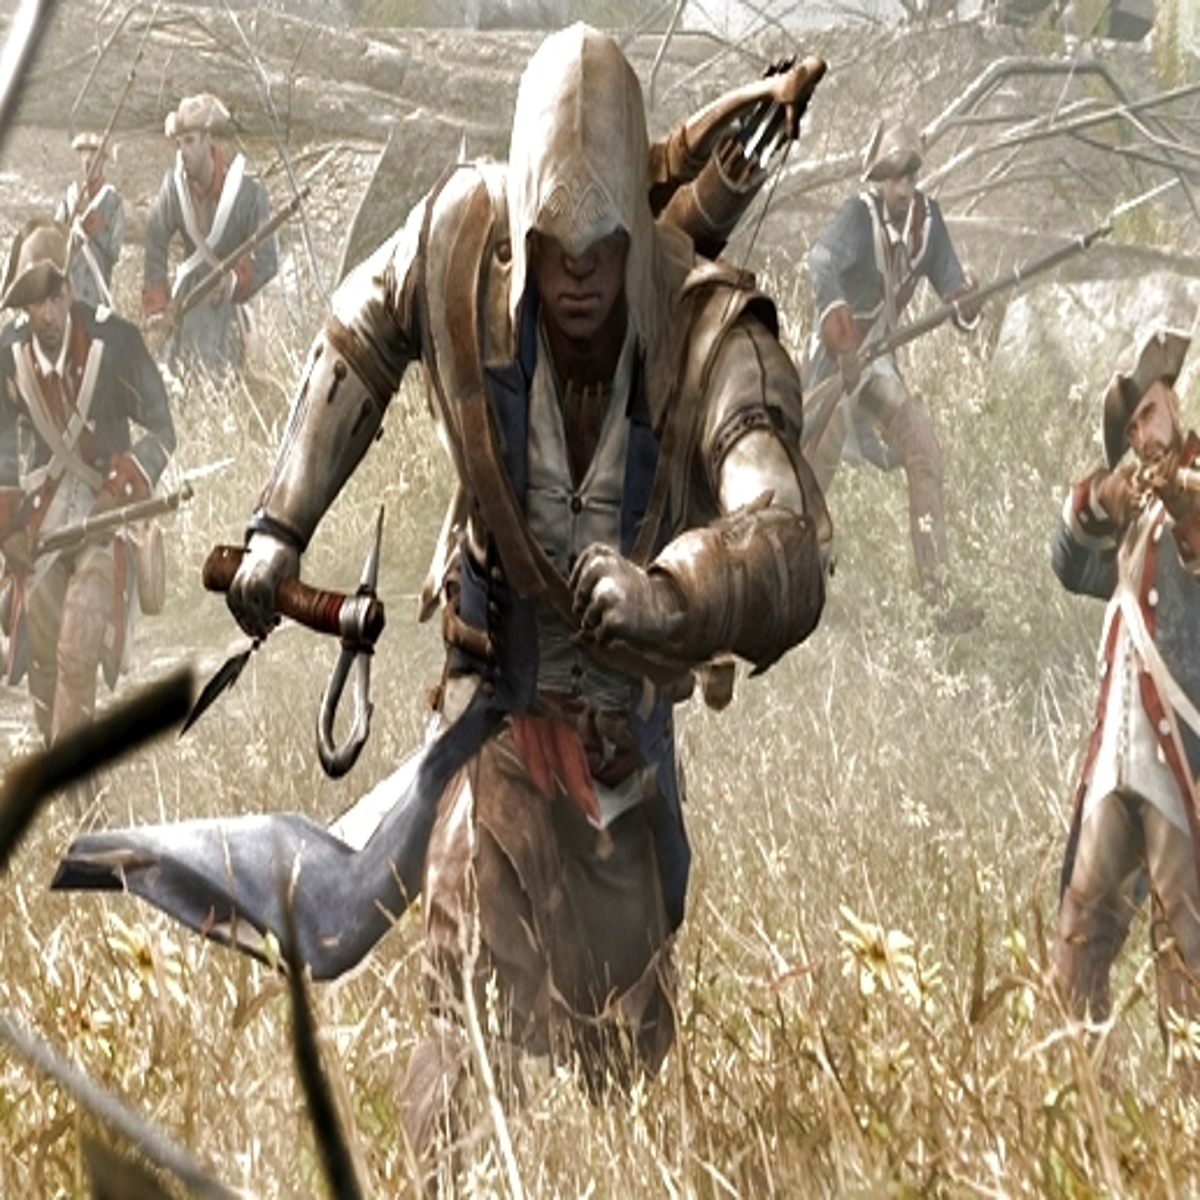  Assassin's Creed III - Nintendo Wii U : Everything Else